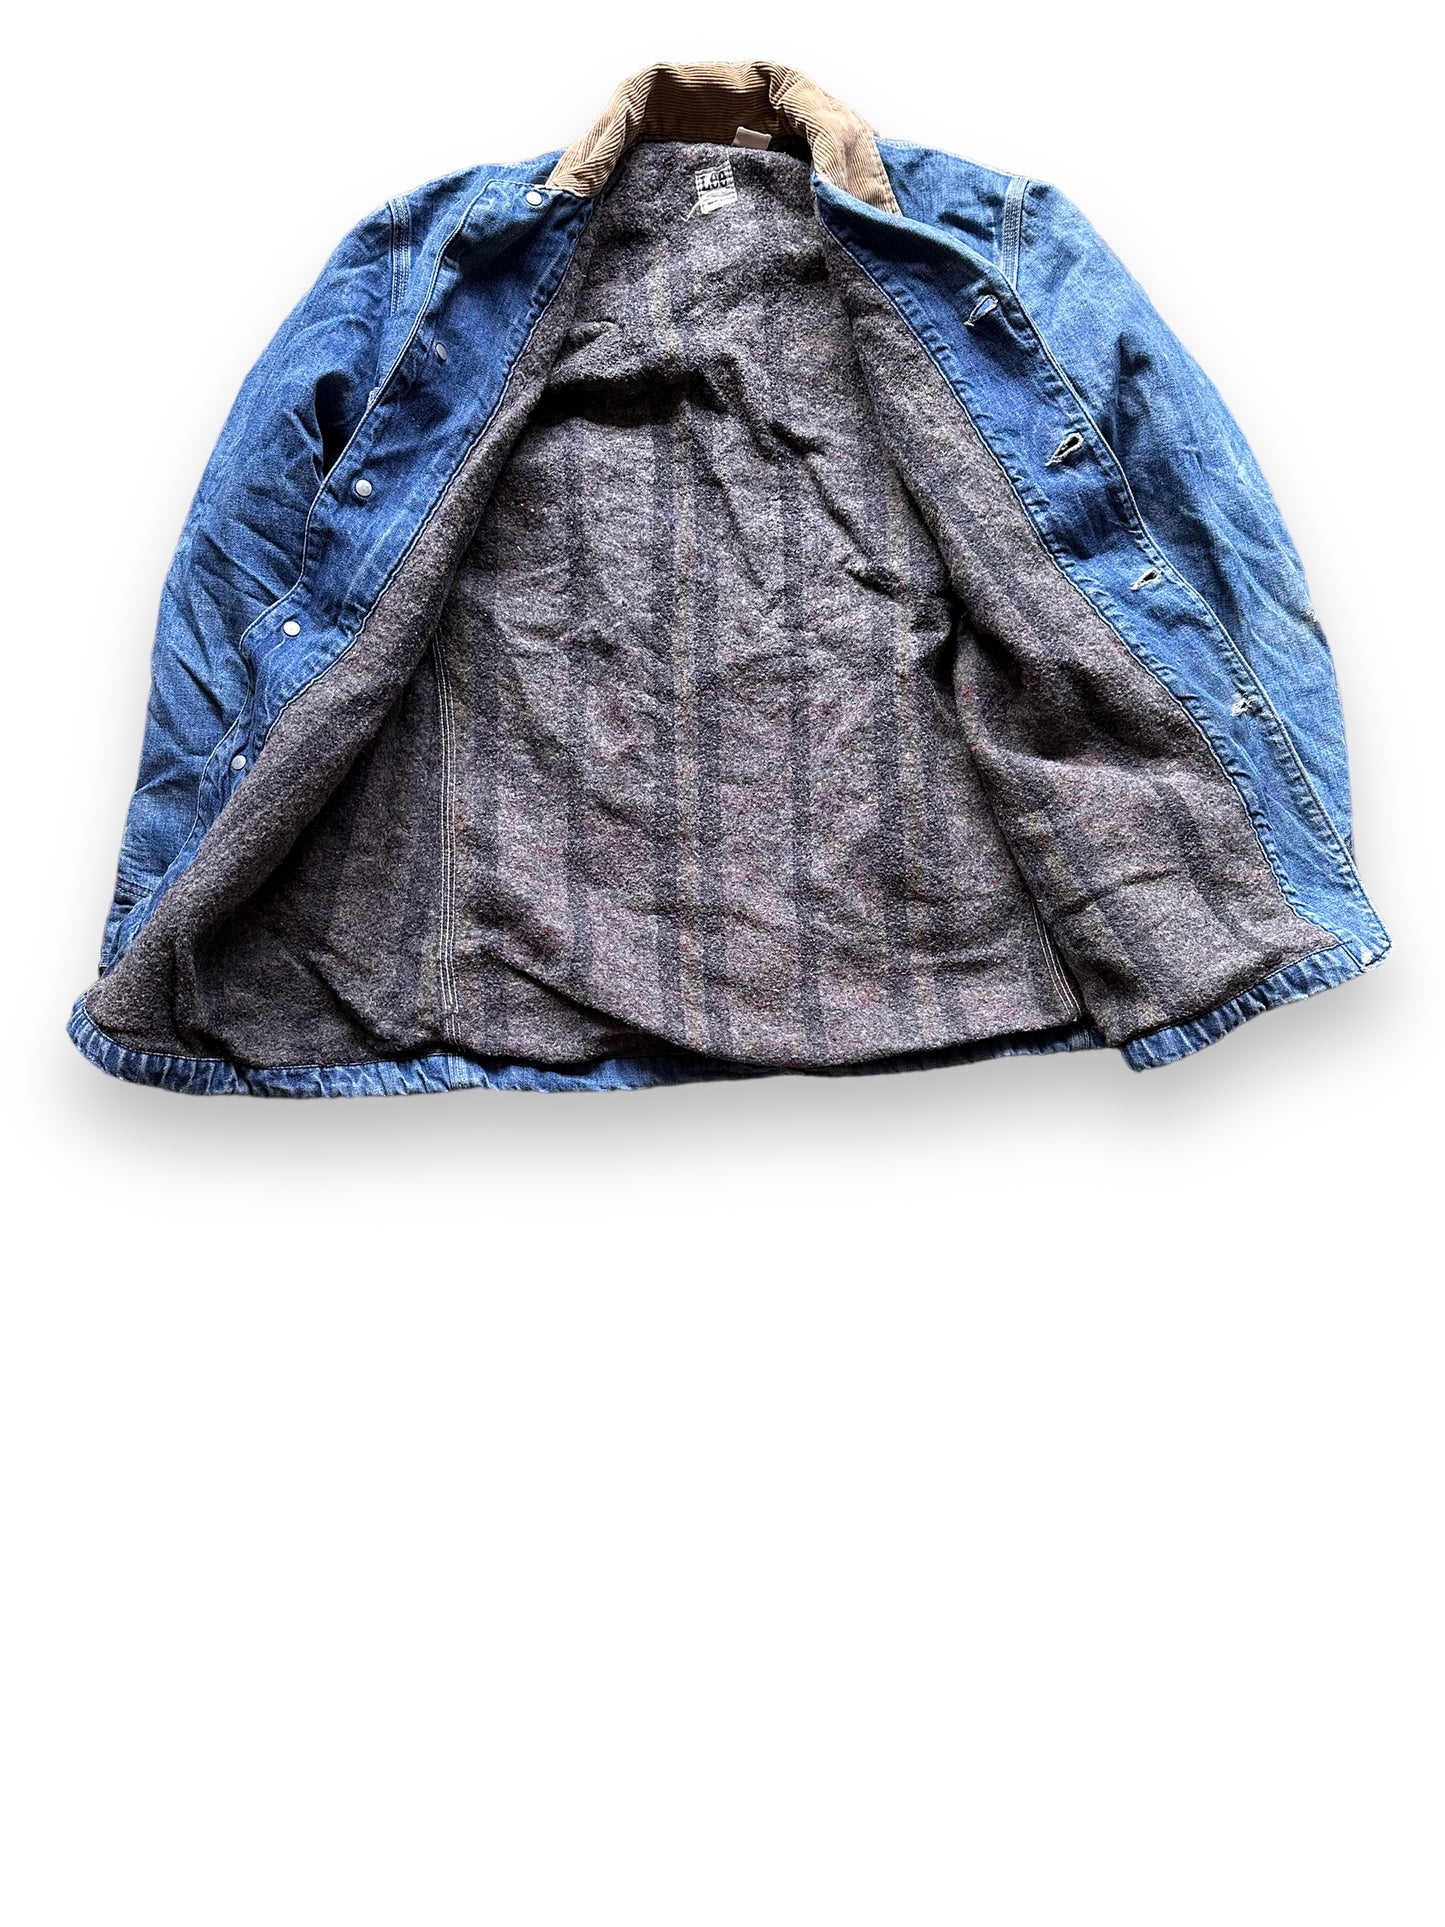 Liner View of Vintage Blanket Lined Lee Denim Chore Jacket SZ XL| Vintage Denim Workwear | Seattle Vintage Workwear